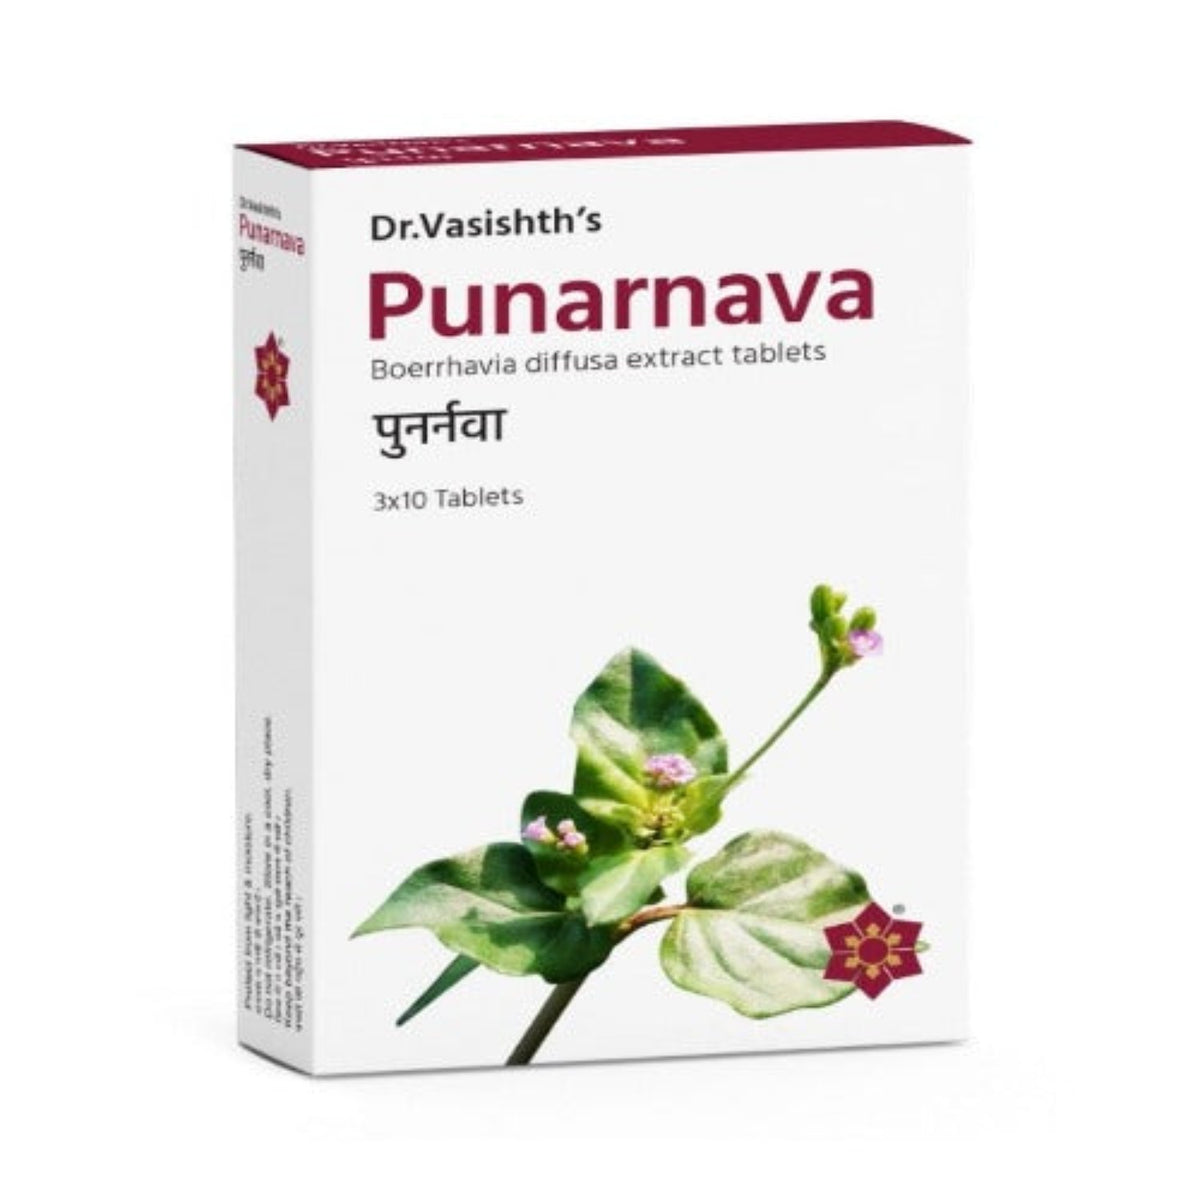 Dr.Vasishth's Ayurvedic Punarnava 3 X 10 Tablets